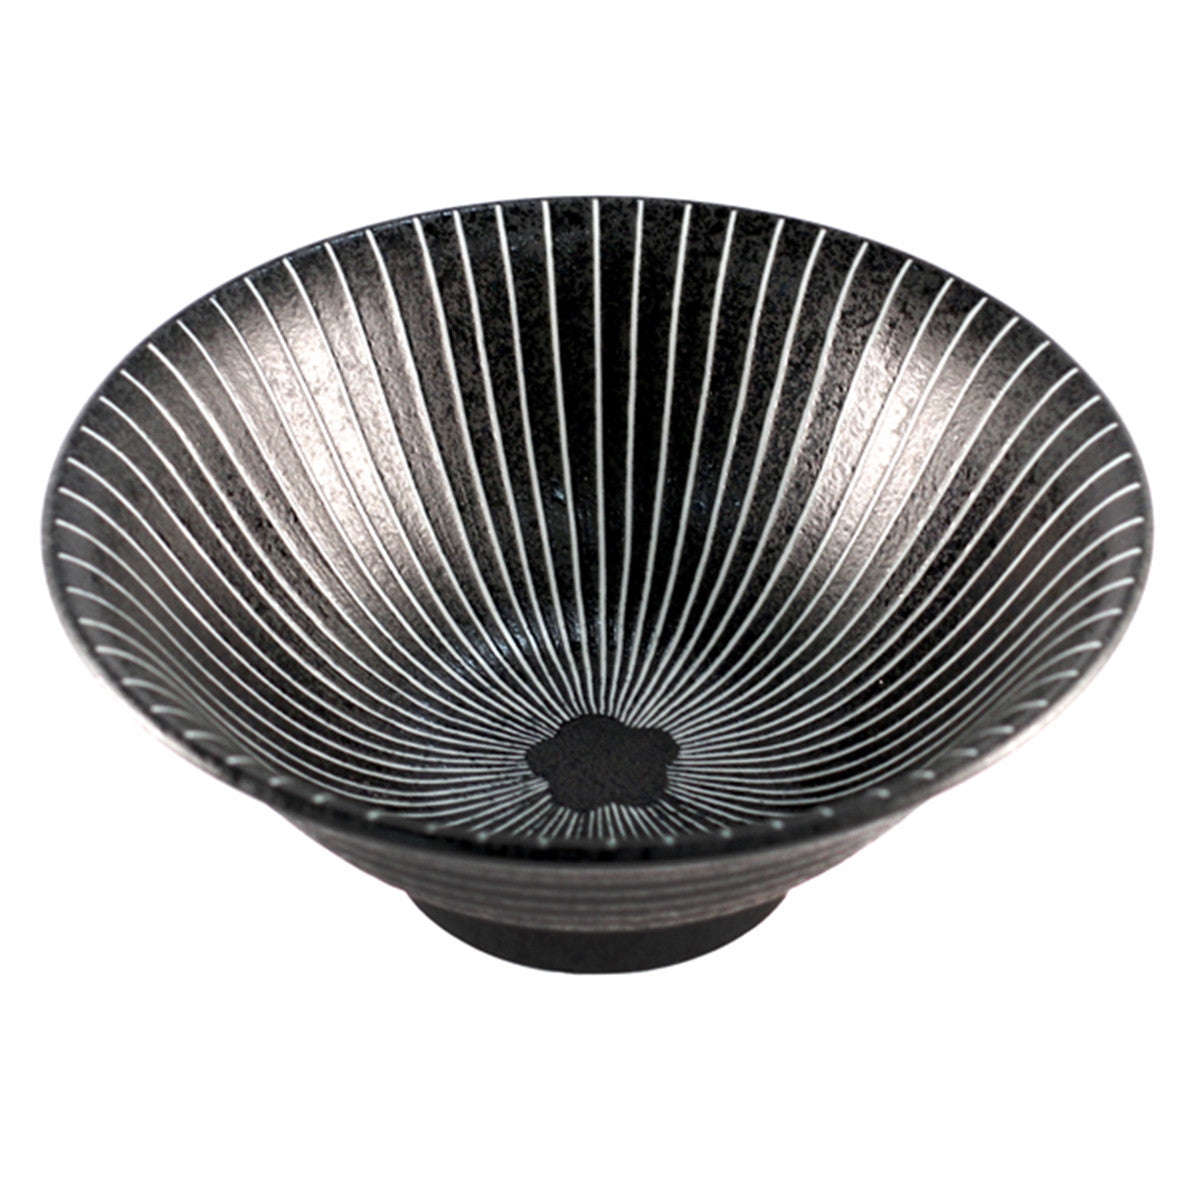 Black Bowl with Stripes 31 fl oz / 7.64